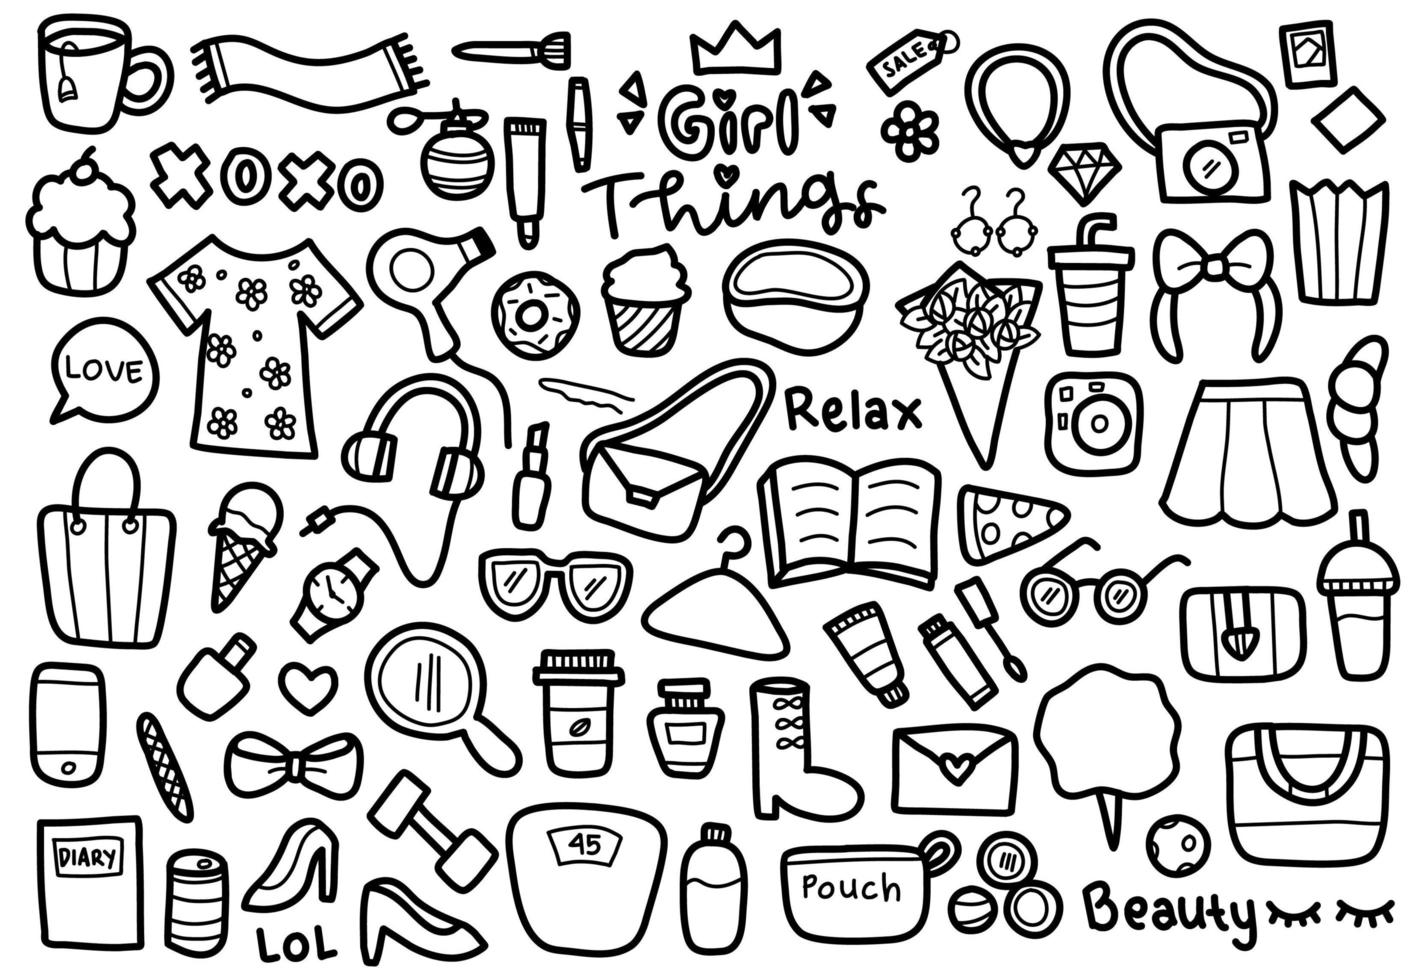 Girl items doodle set vector